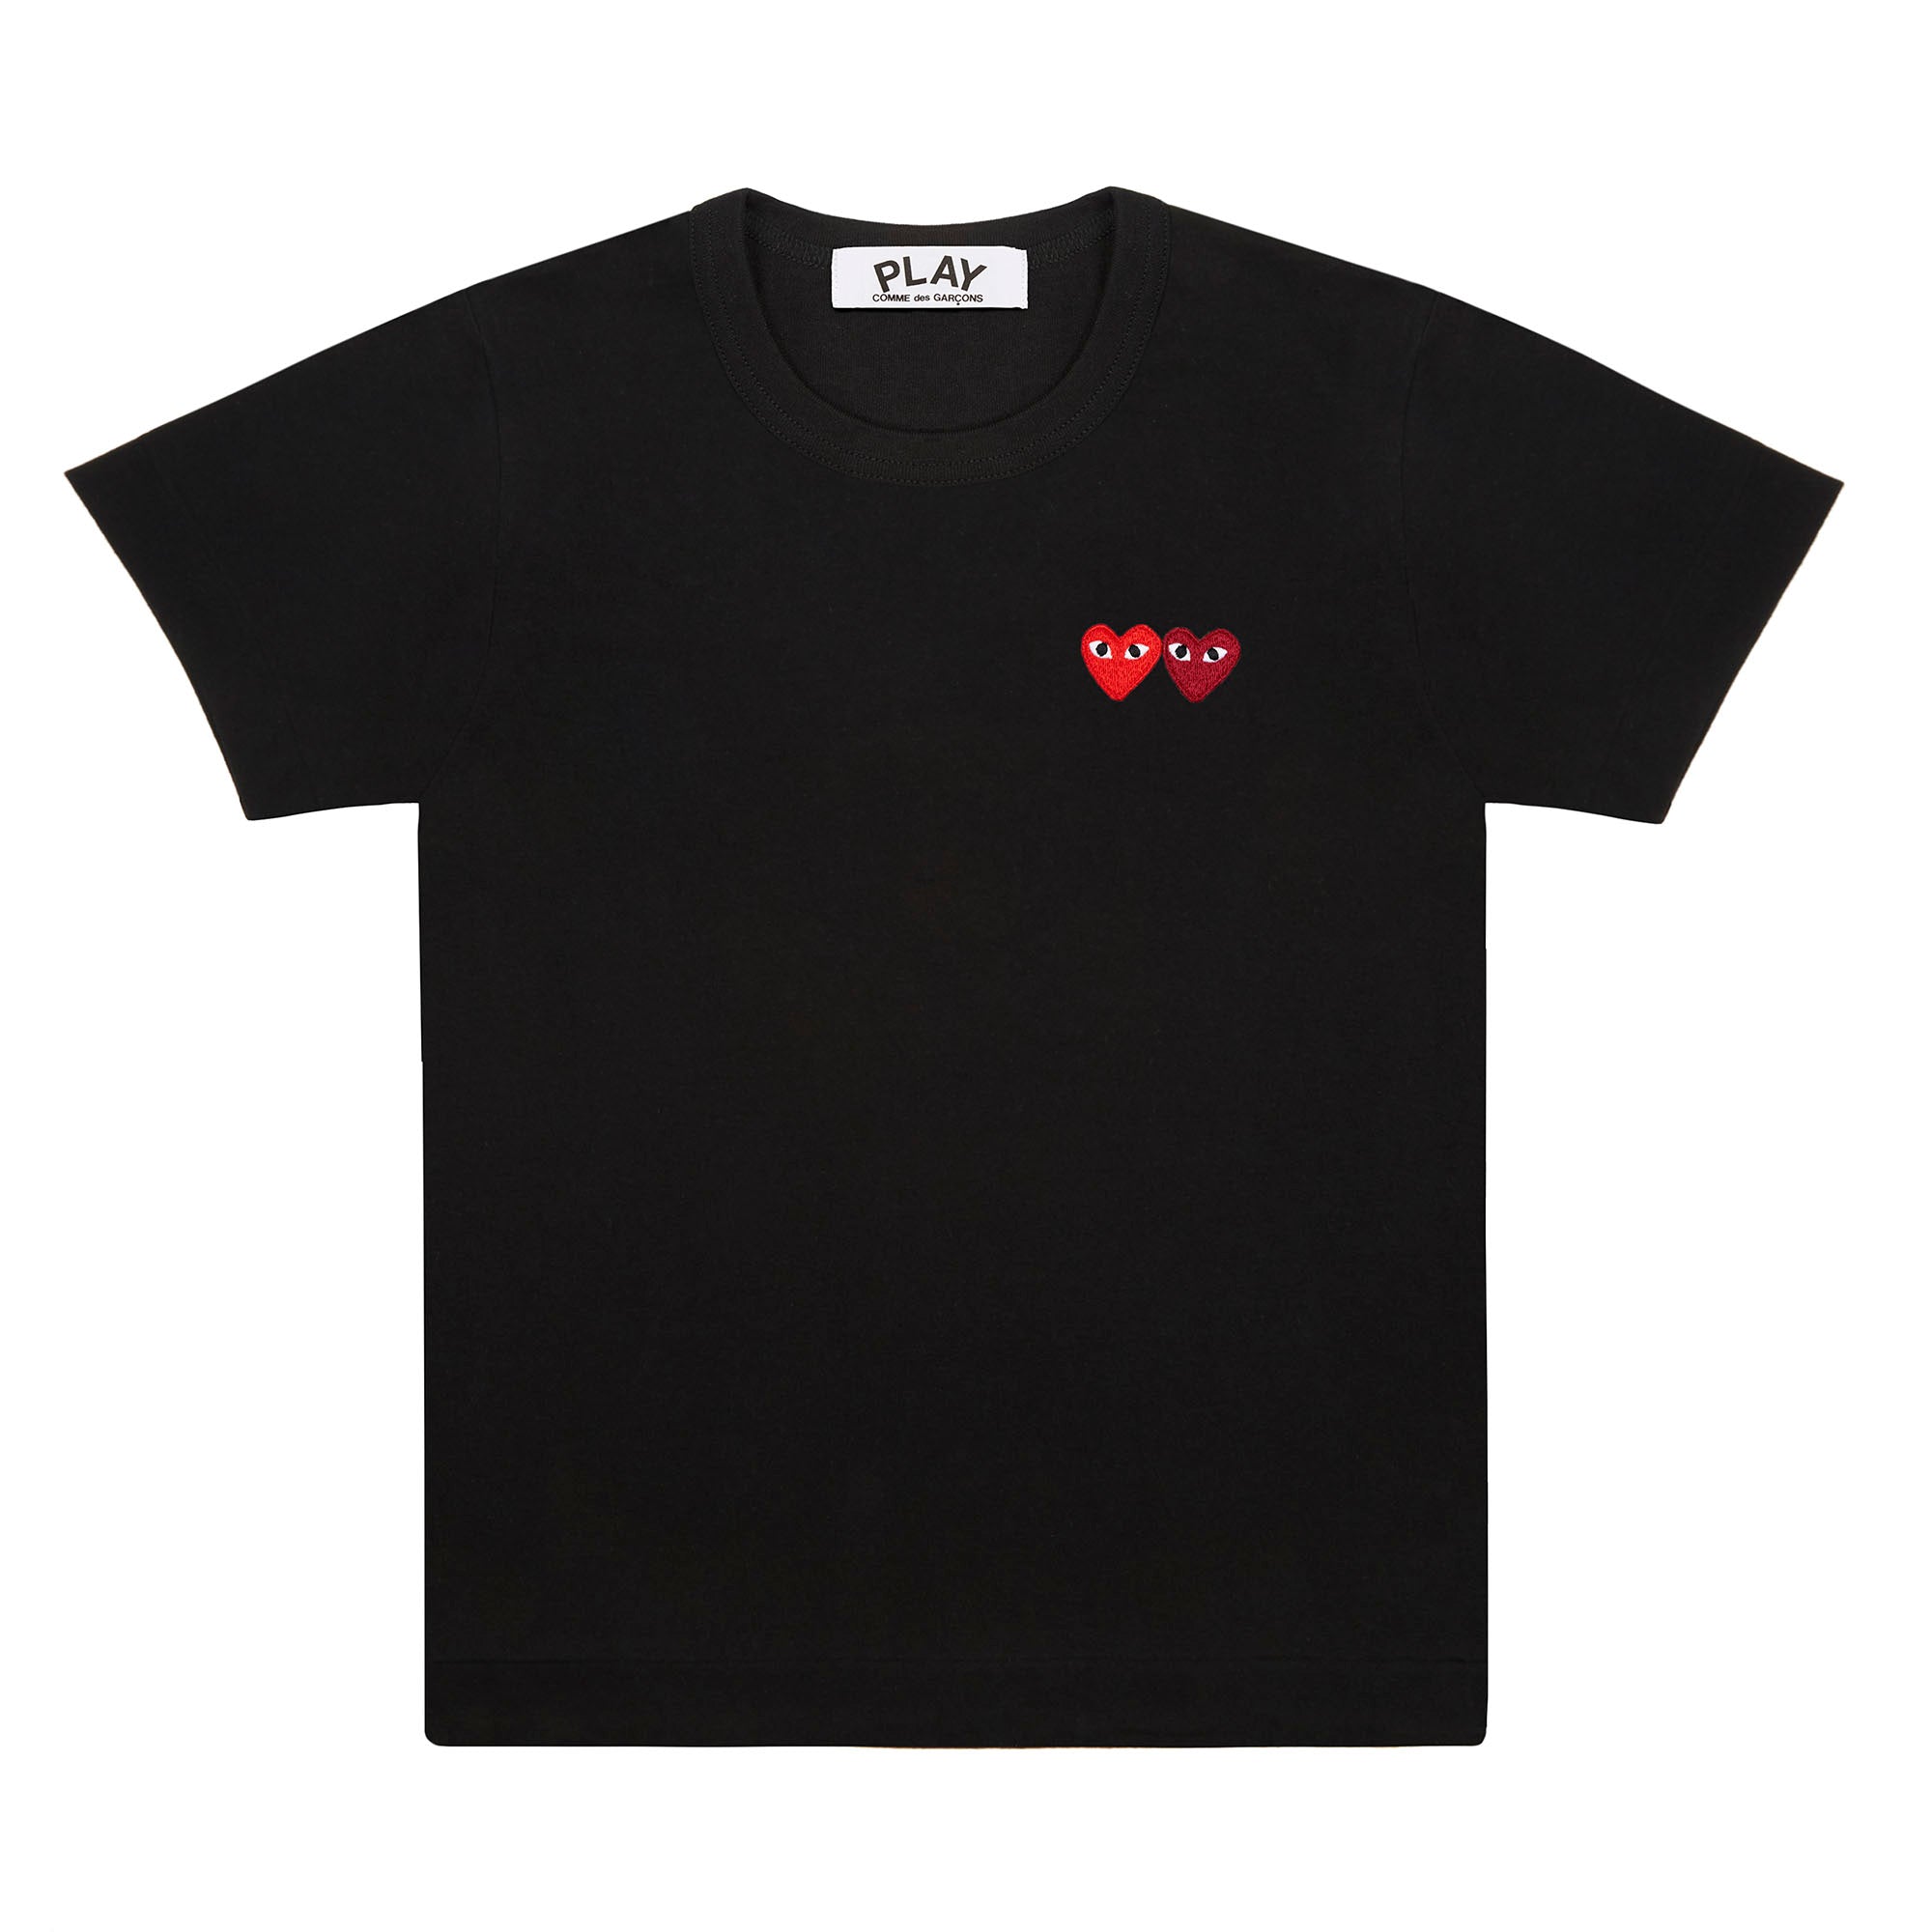 Play Comme des Garçons - T-Shirt with Double Heart - (Black) view 1